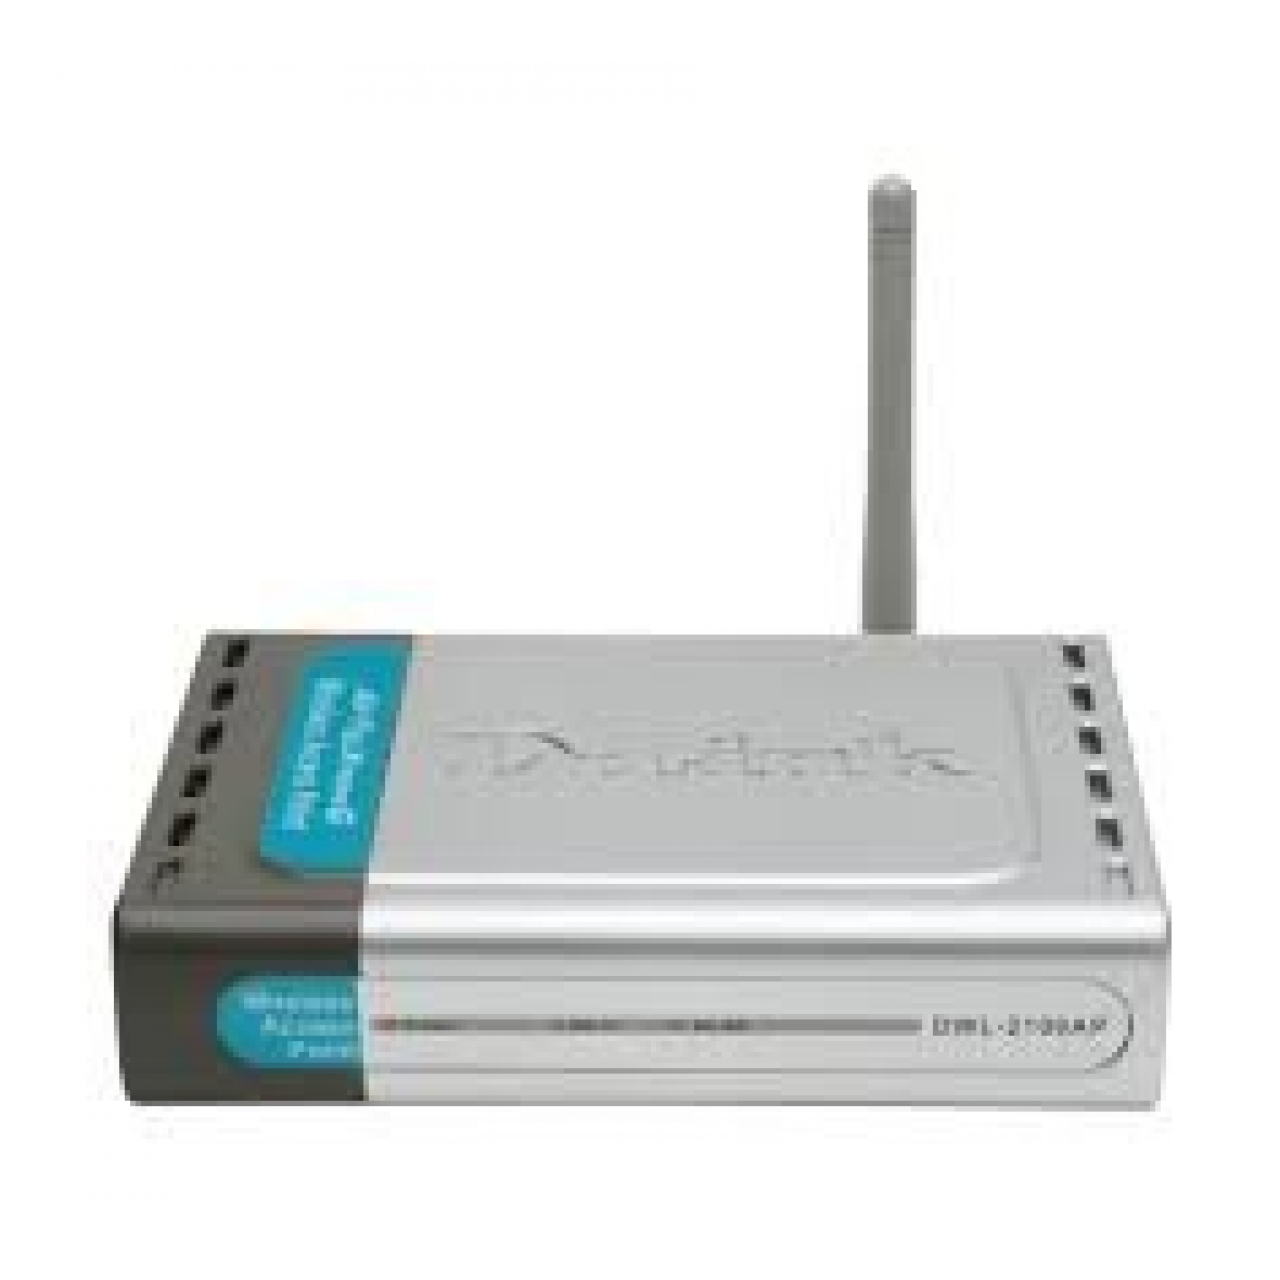 DLINK DAP-3220-EAU Wireless 108Mbps Outdoor Wireless Access Point